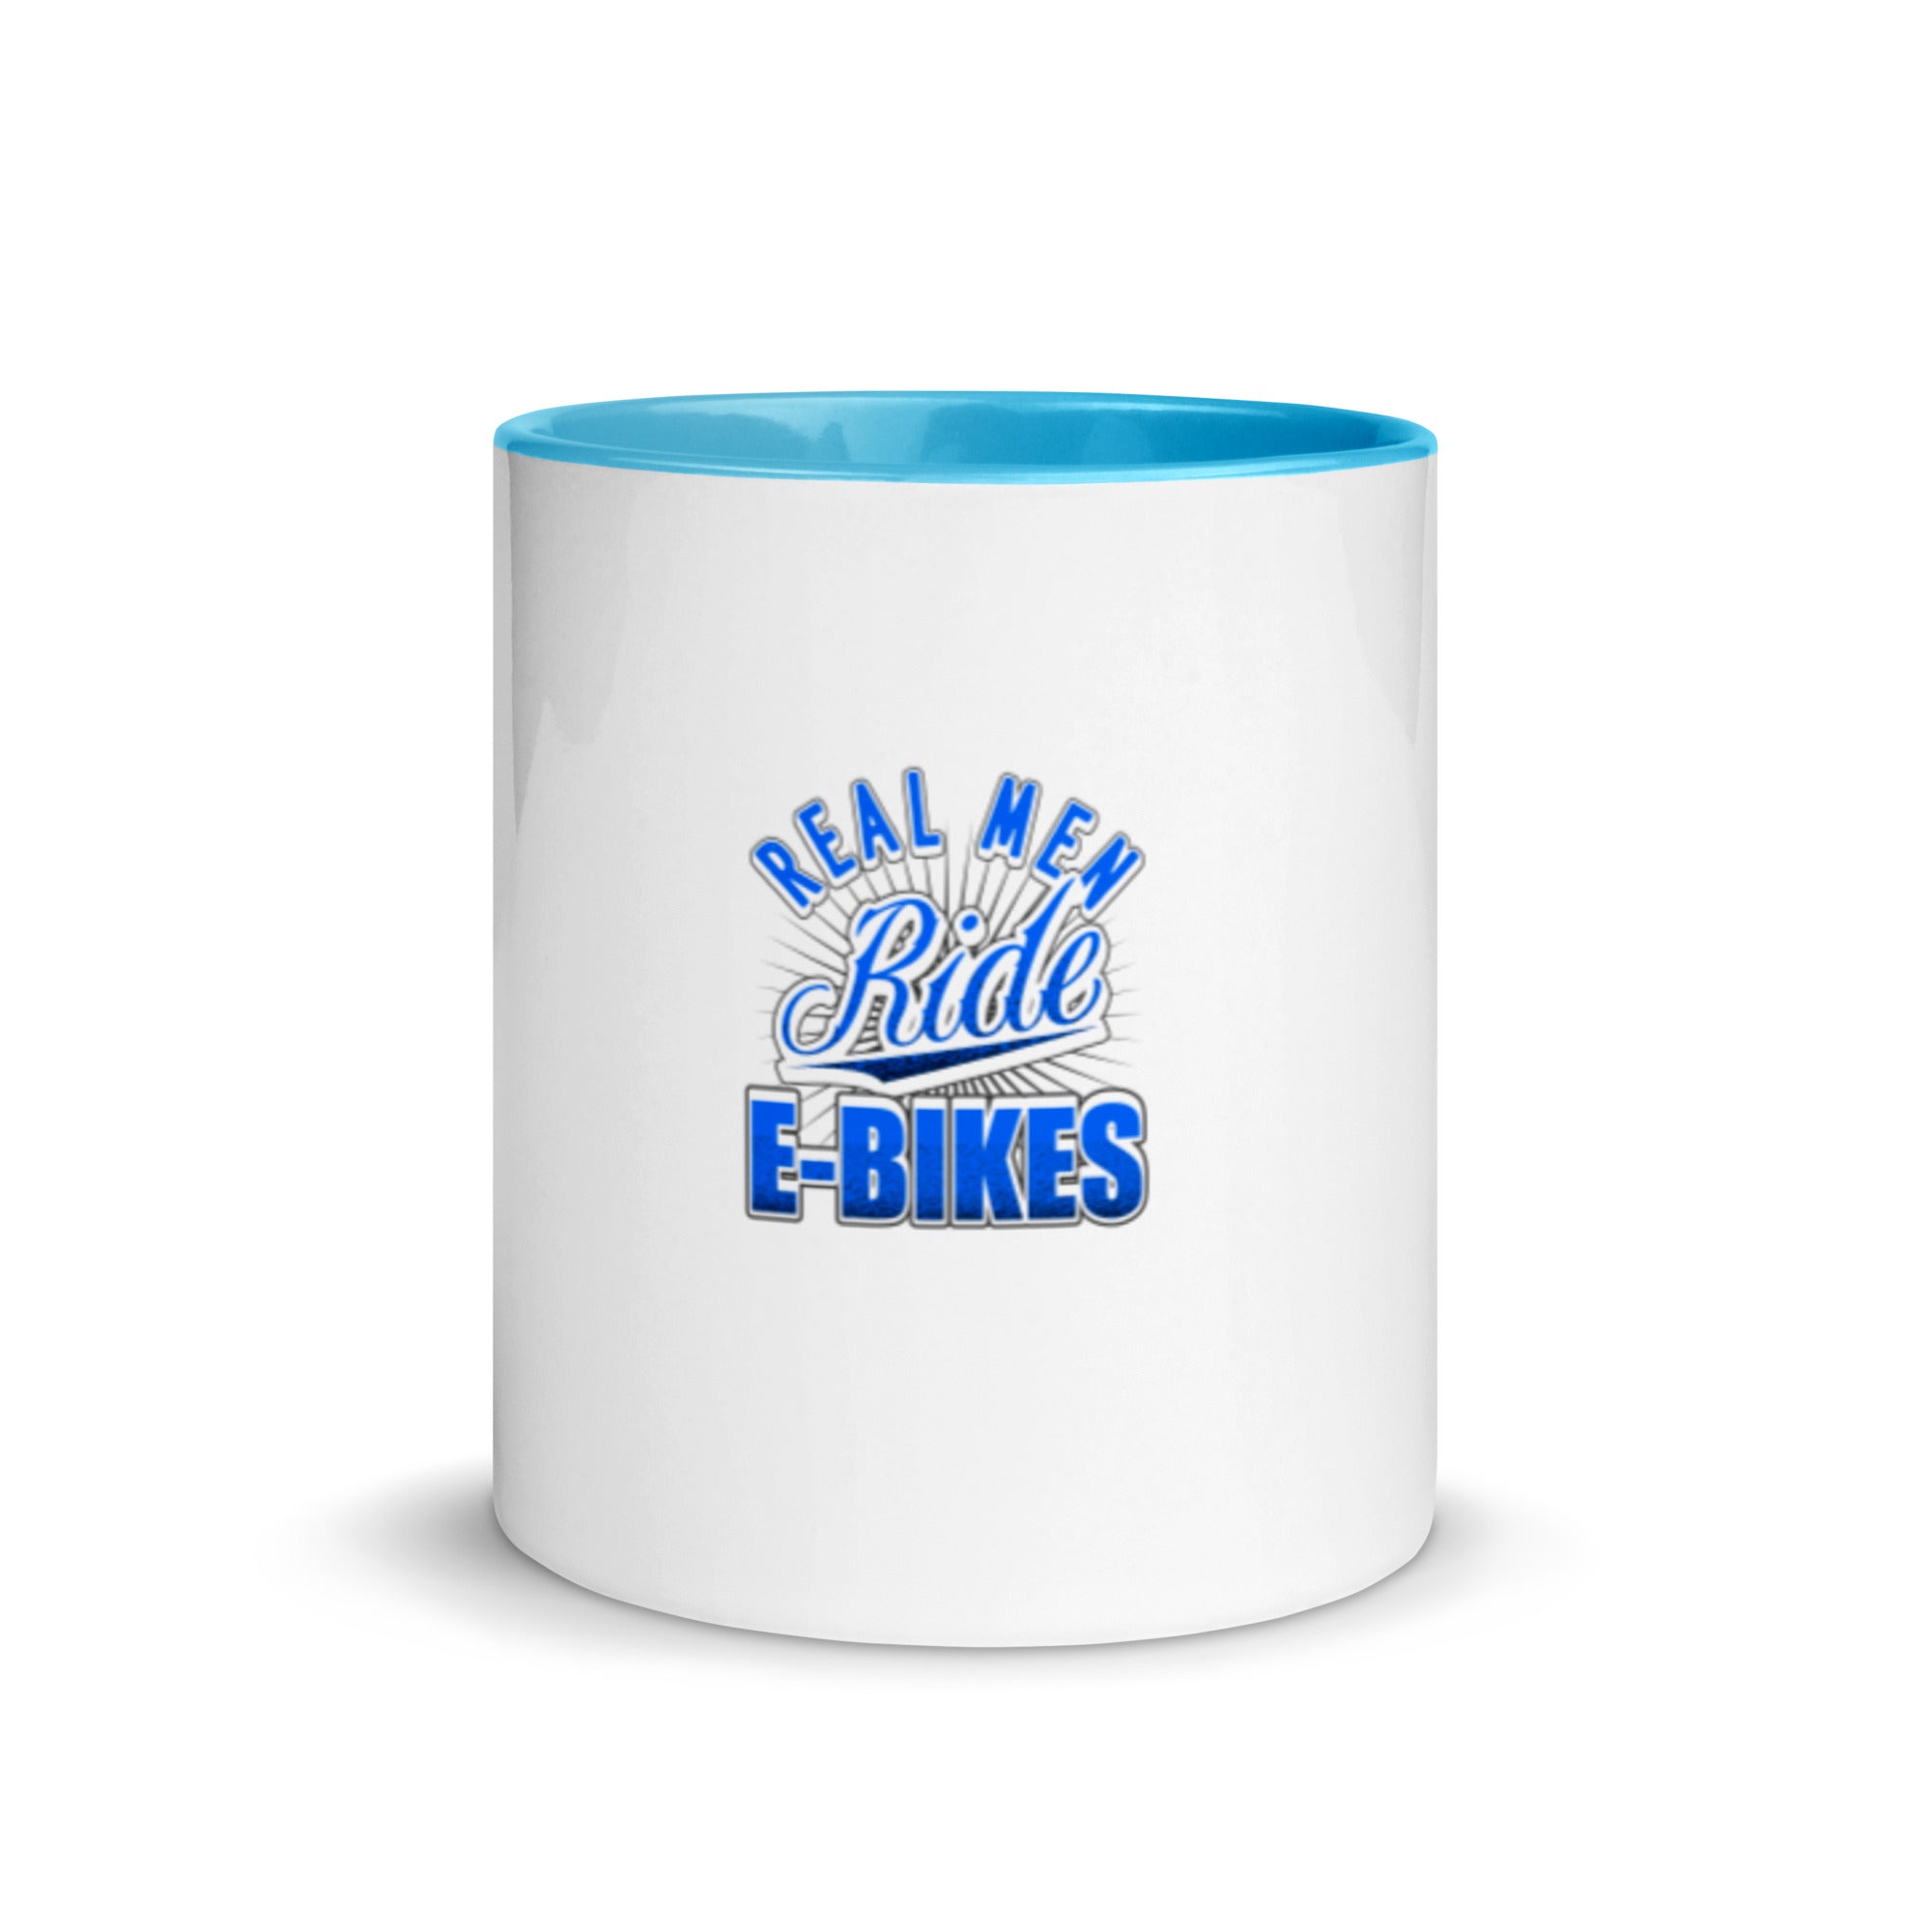 Real Men Ride E-bikes White Ceramic Coffee Mug with Color Inside